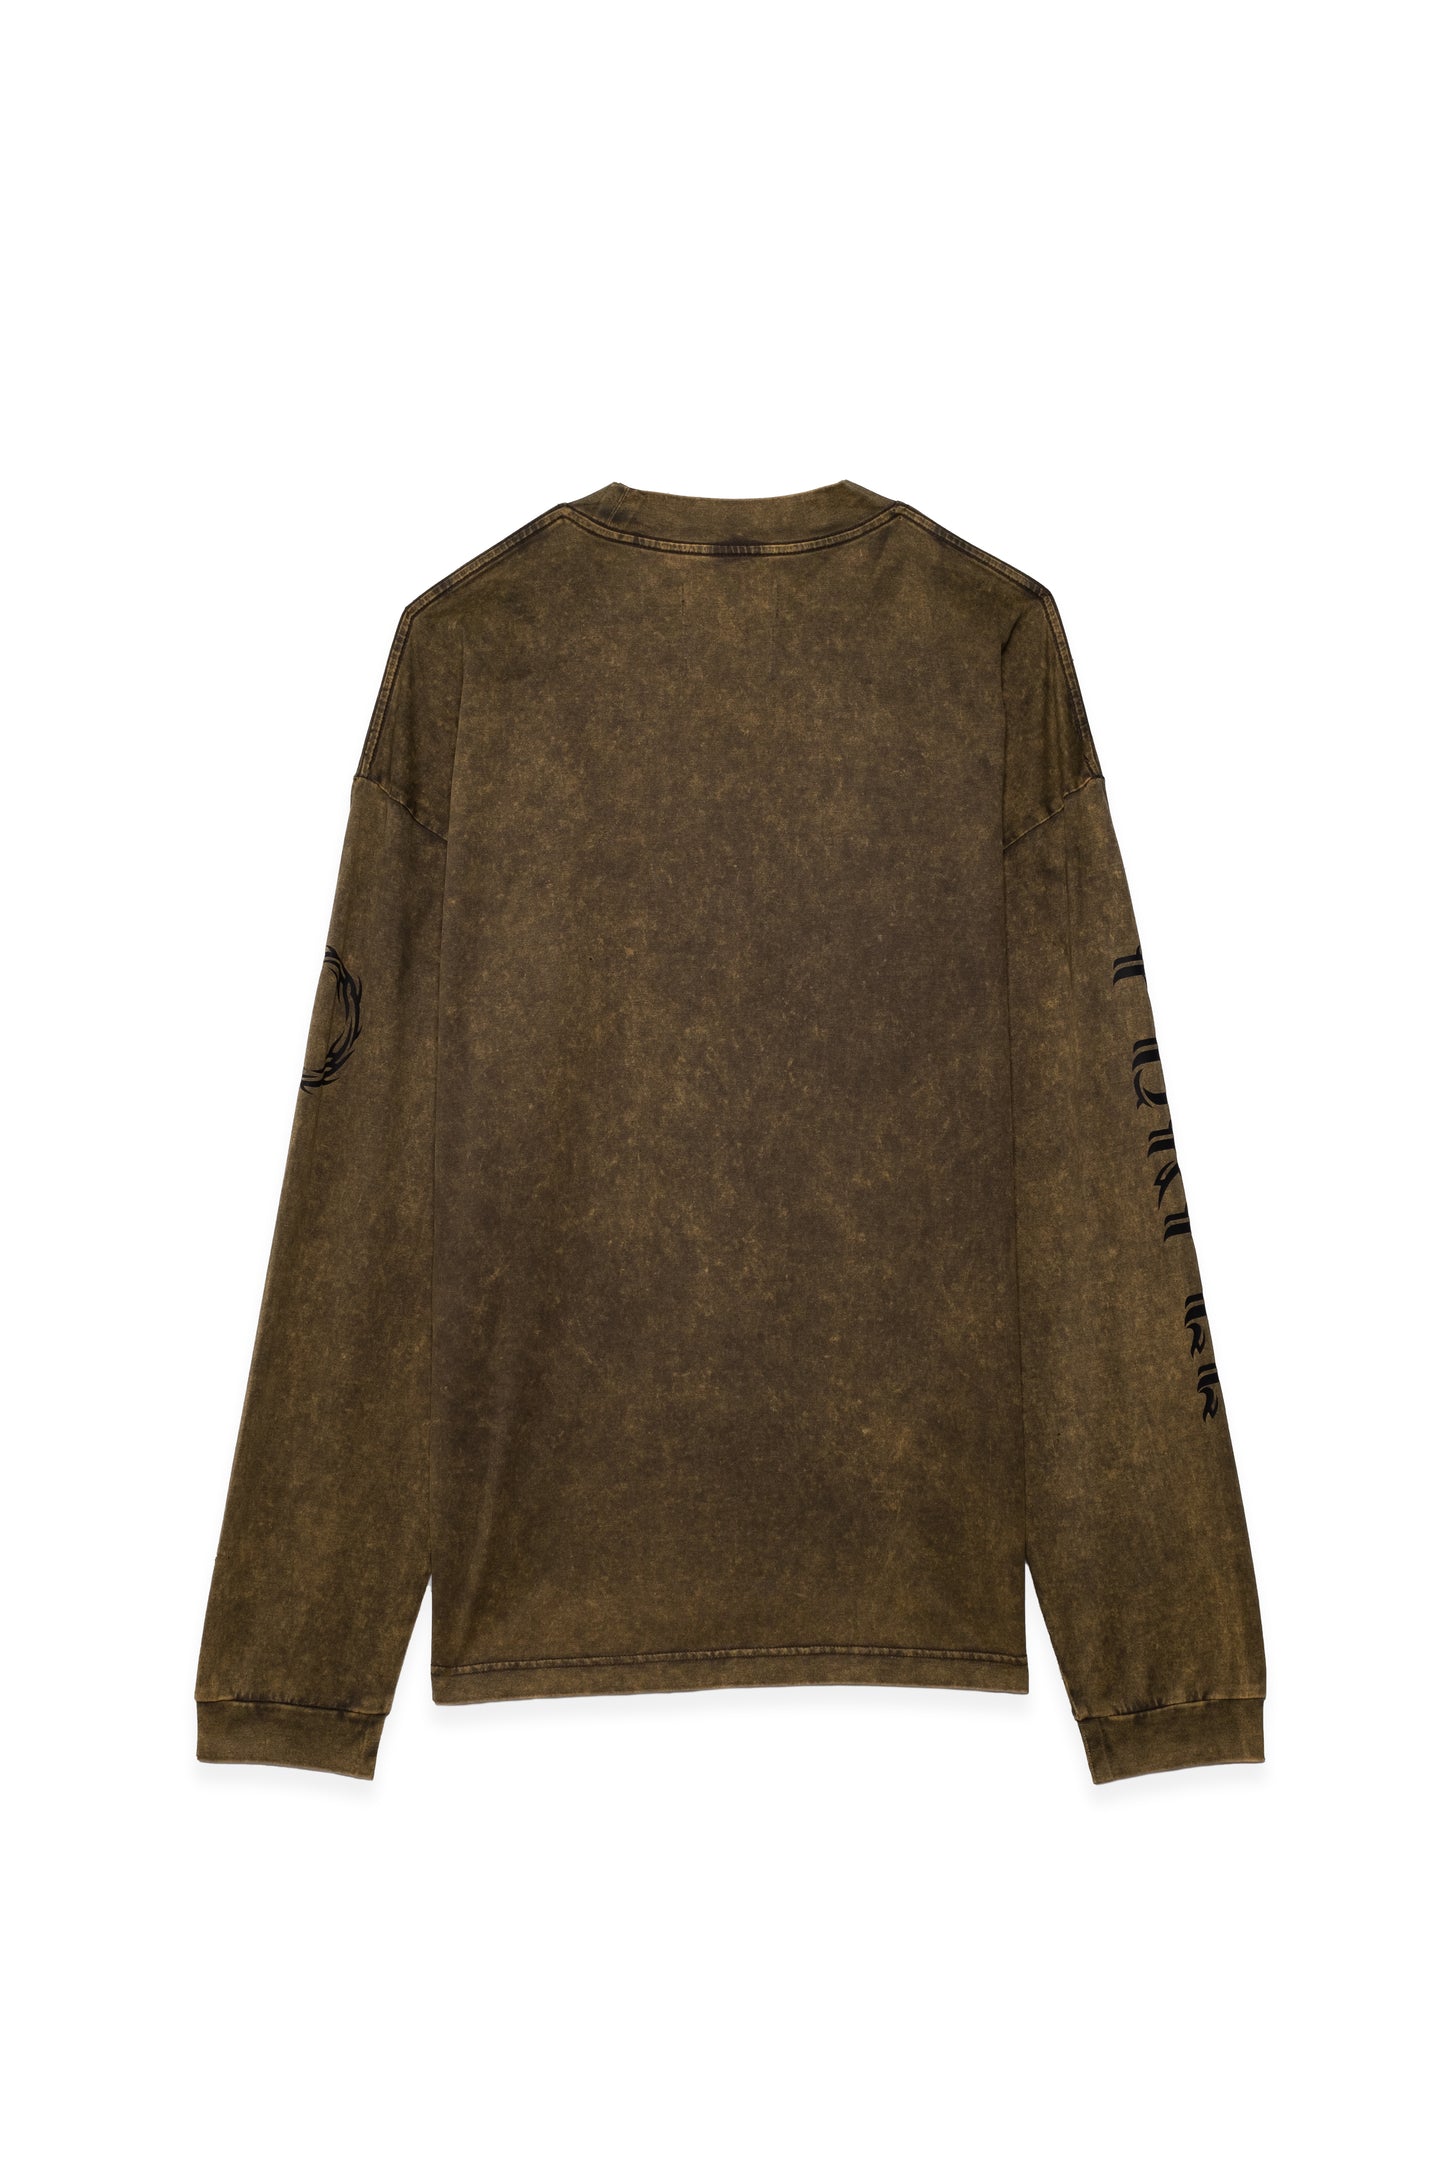 PURPLE BRAND - Men's Long Sleeve Shirt Shirt - Style No. P201 - Olive Acid Wash - Back